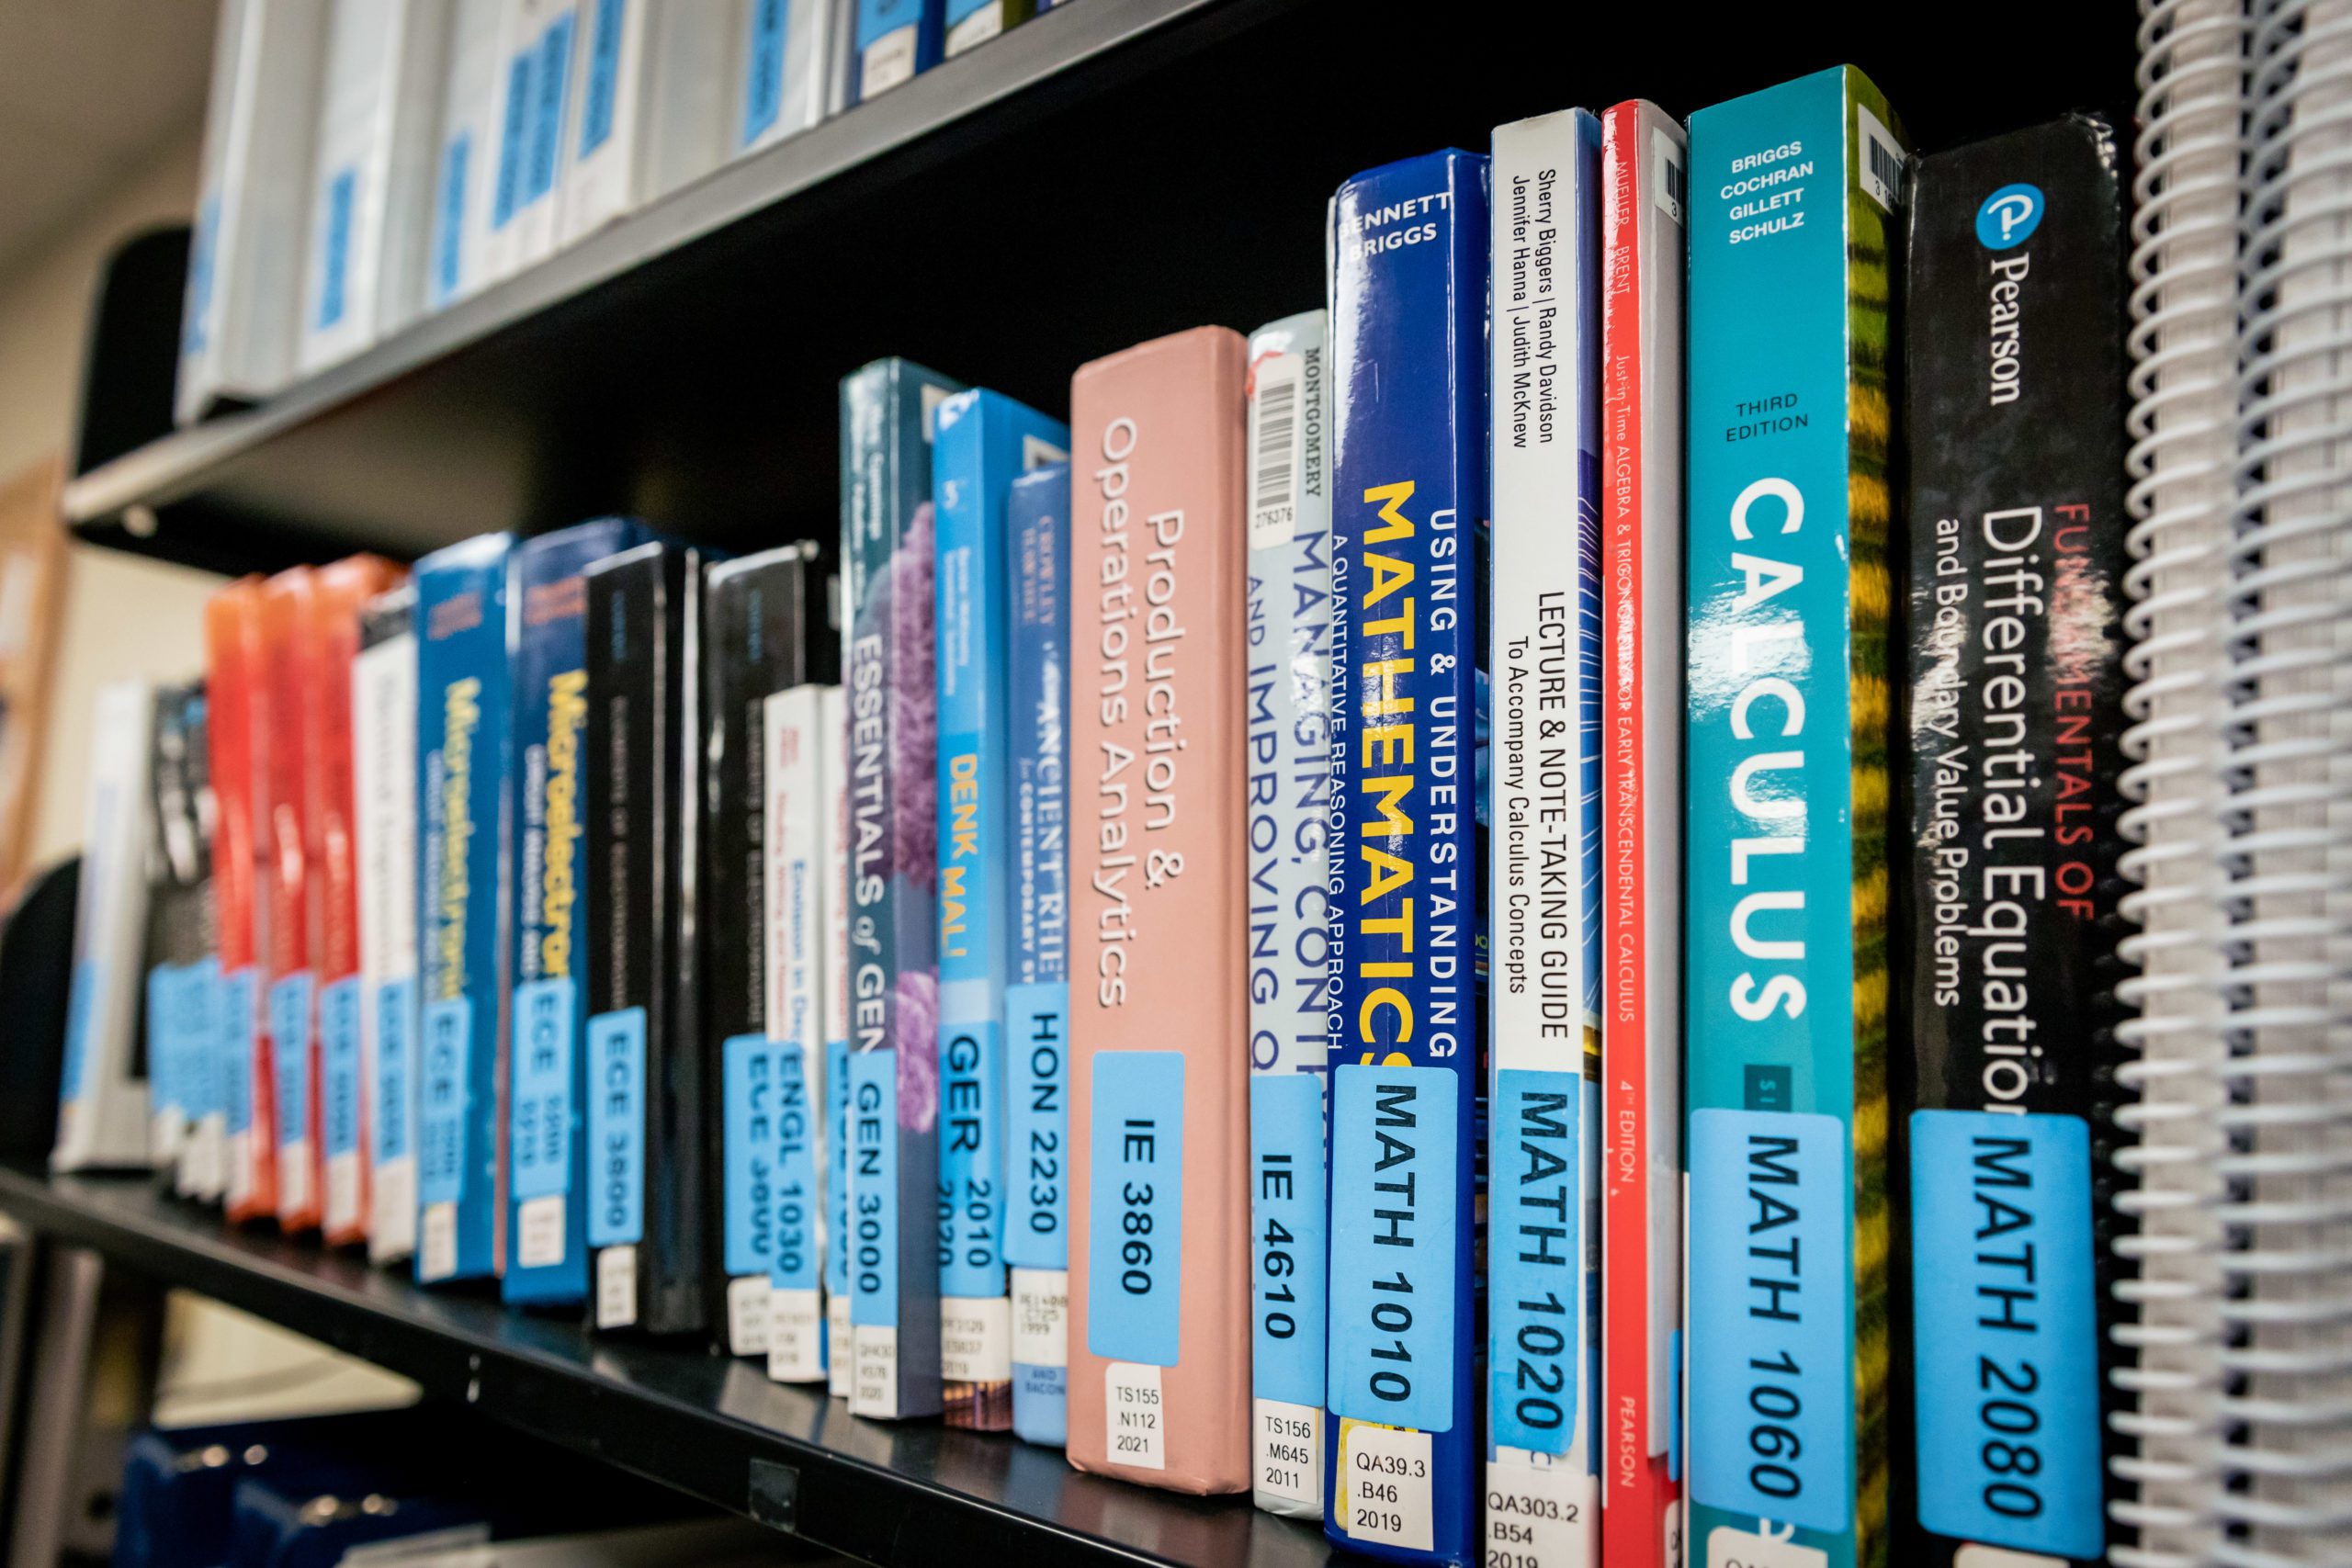 A shelf full of textbooks